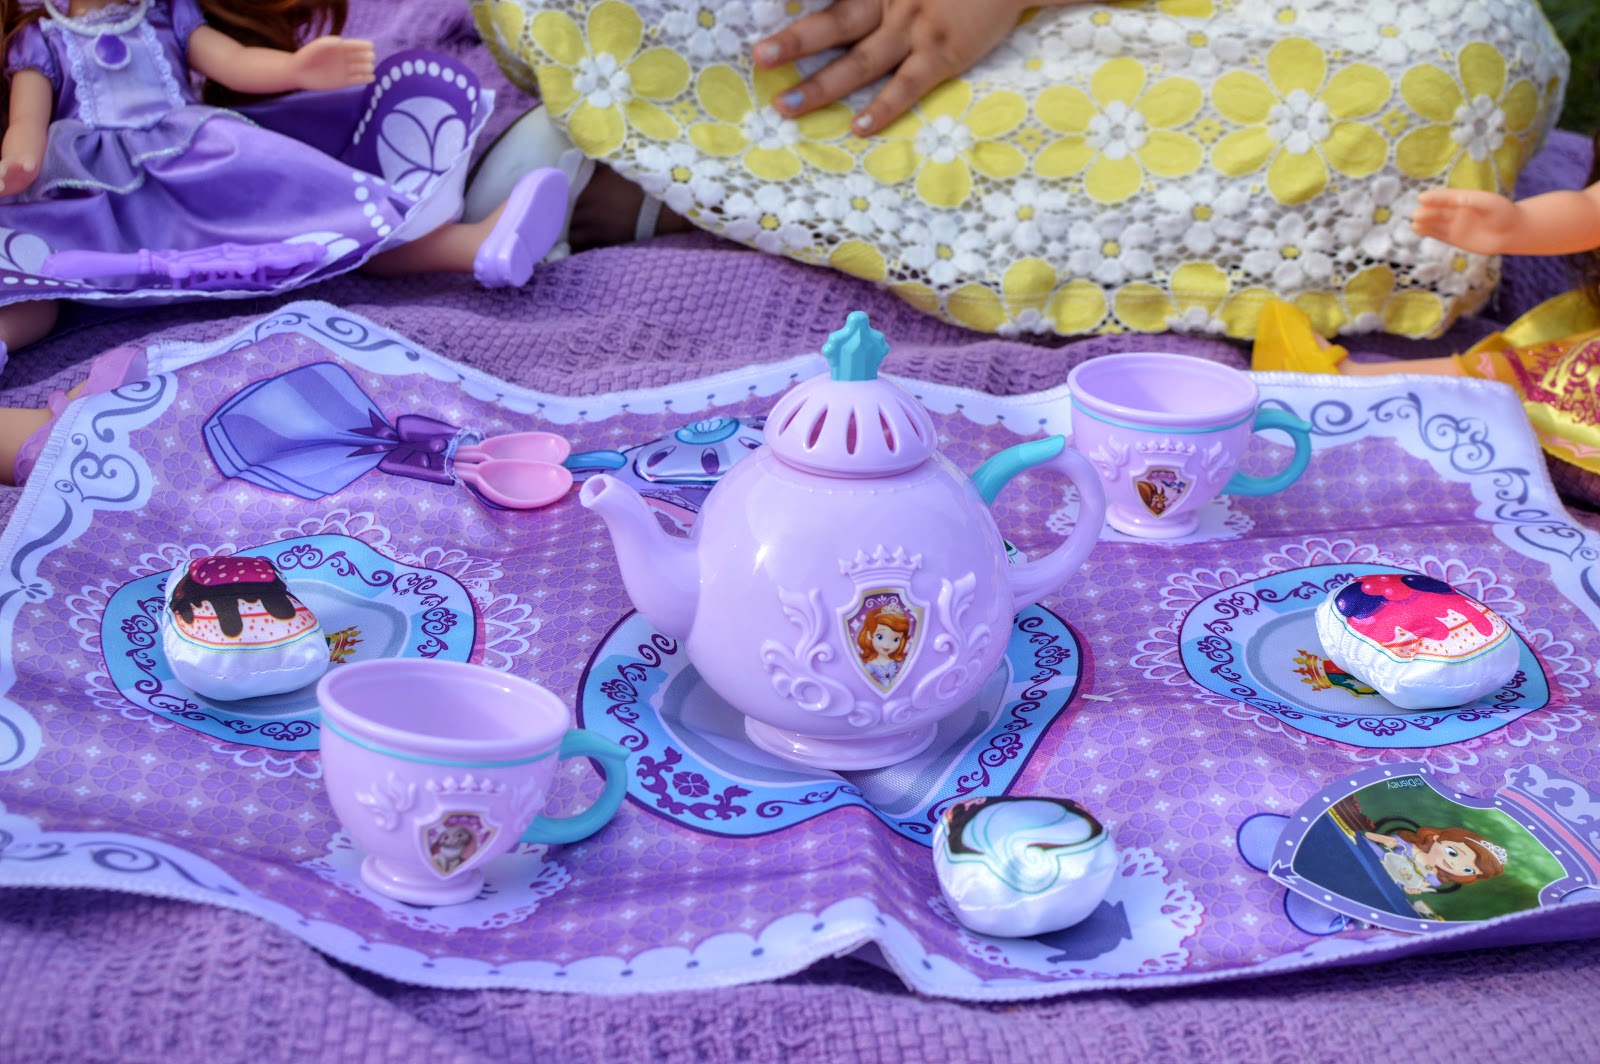 Time for Tea with Jakks Disney Princess Toddler Dolls